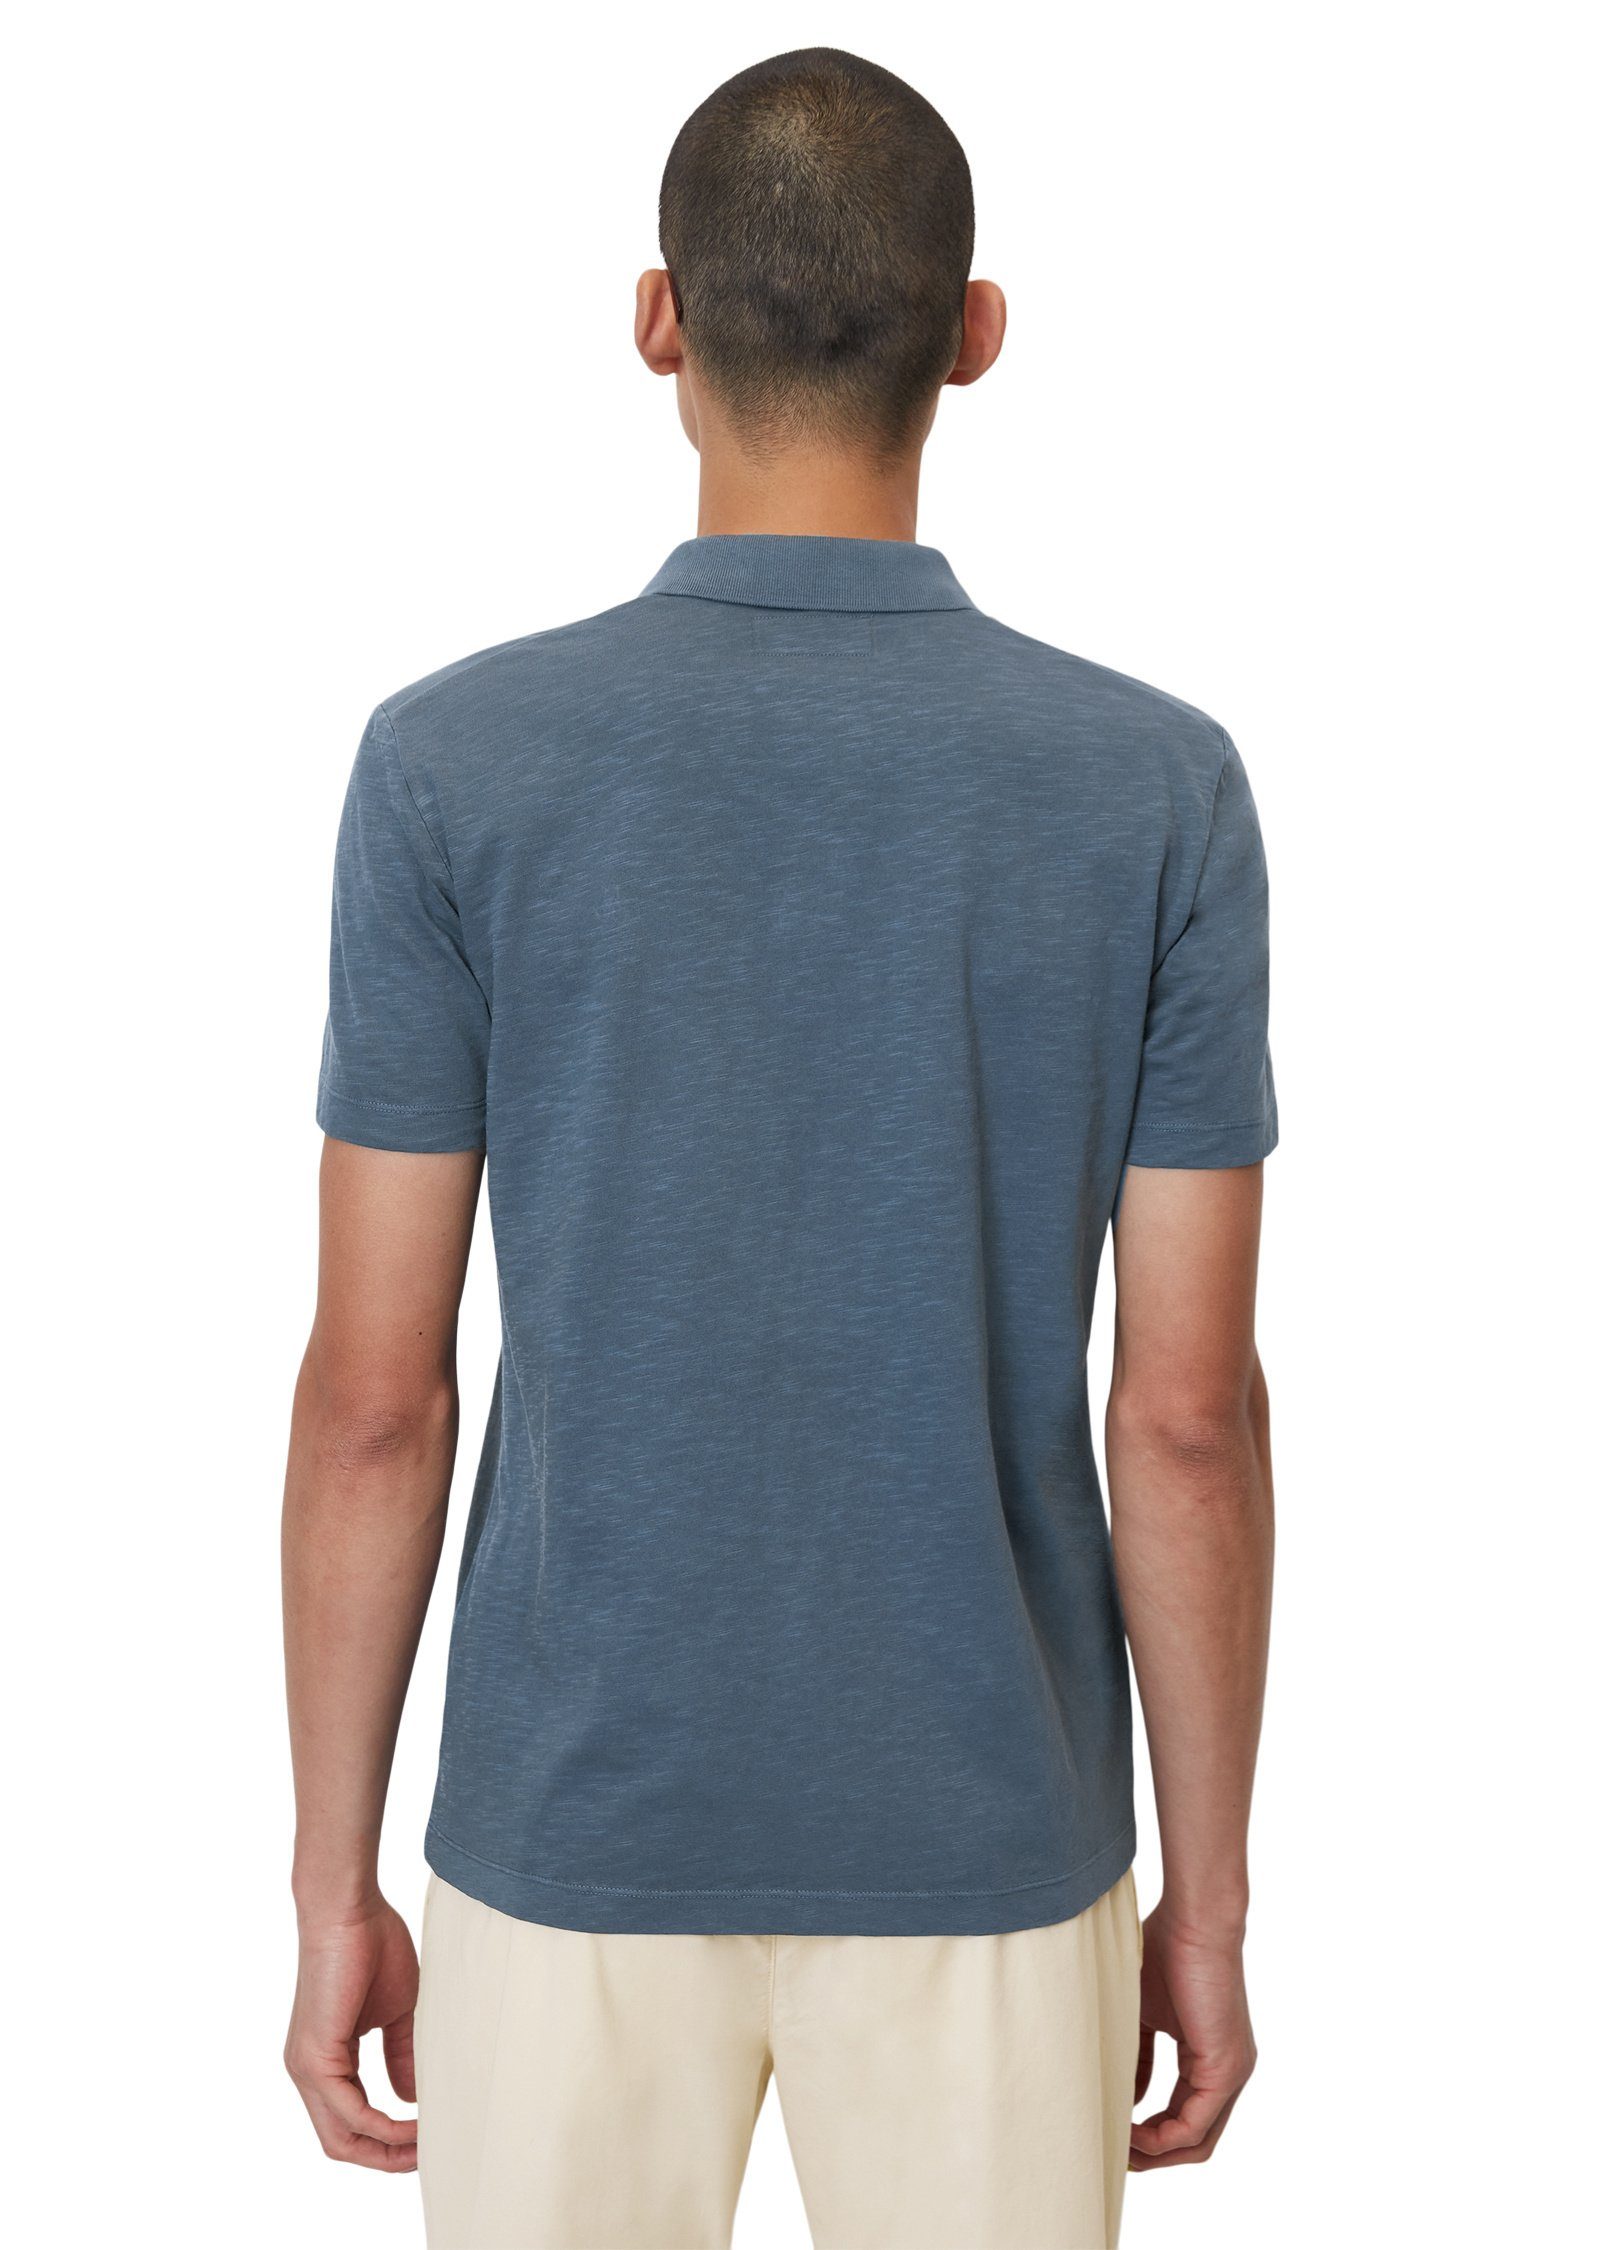 Marc blau in Poloshirt Slub-Jersey-Qualität O'Polo softer